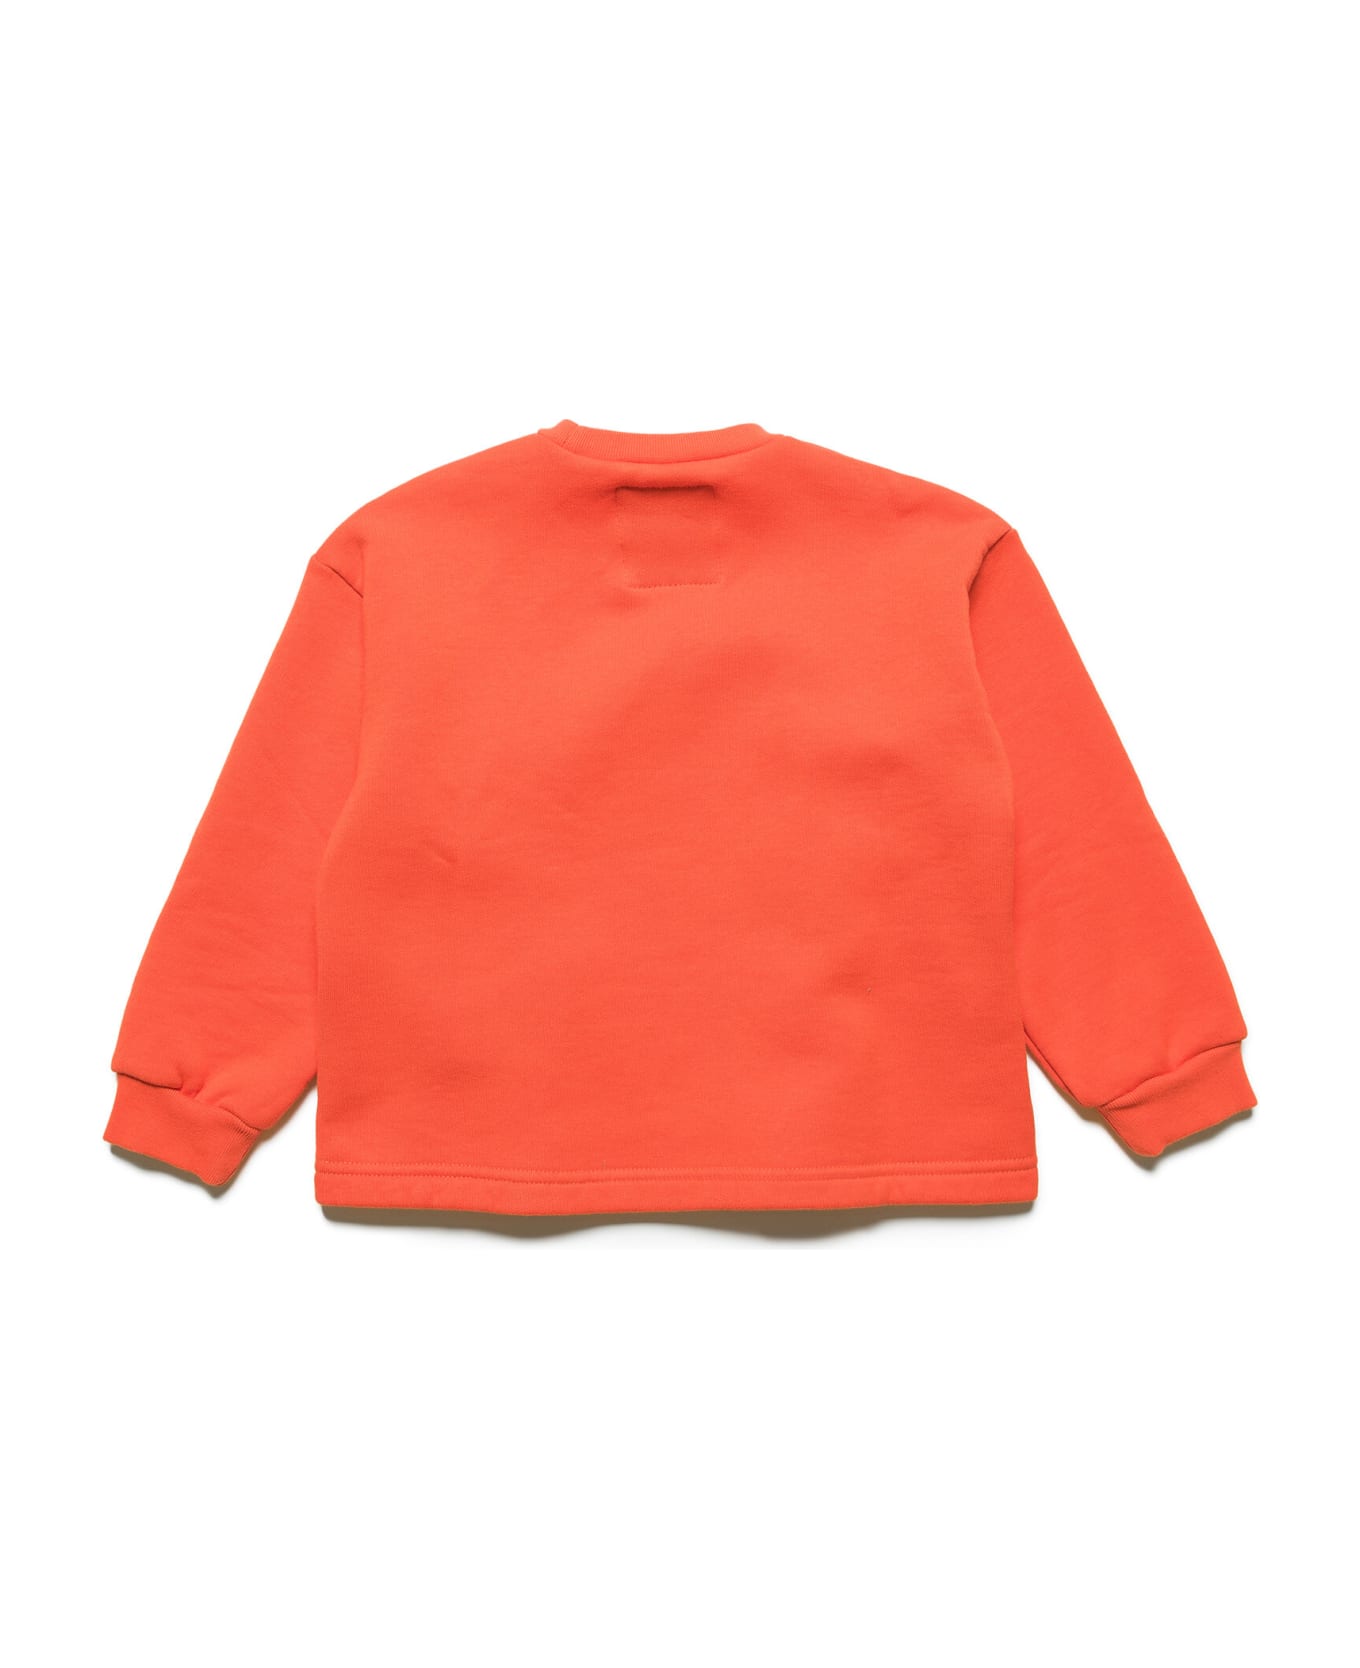 MYAR Mys13u Sweat-shirt Myar - Bright orange